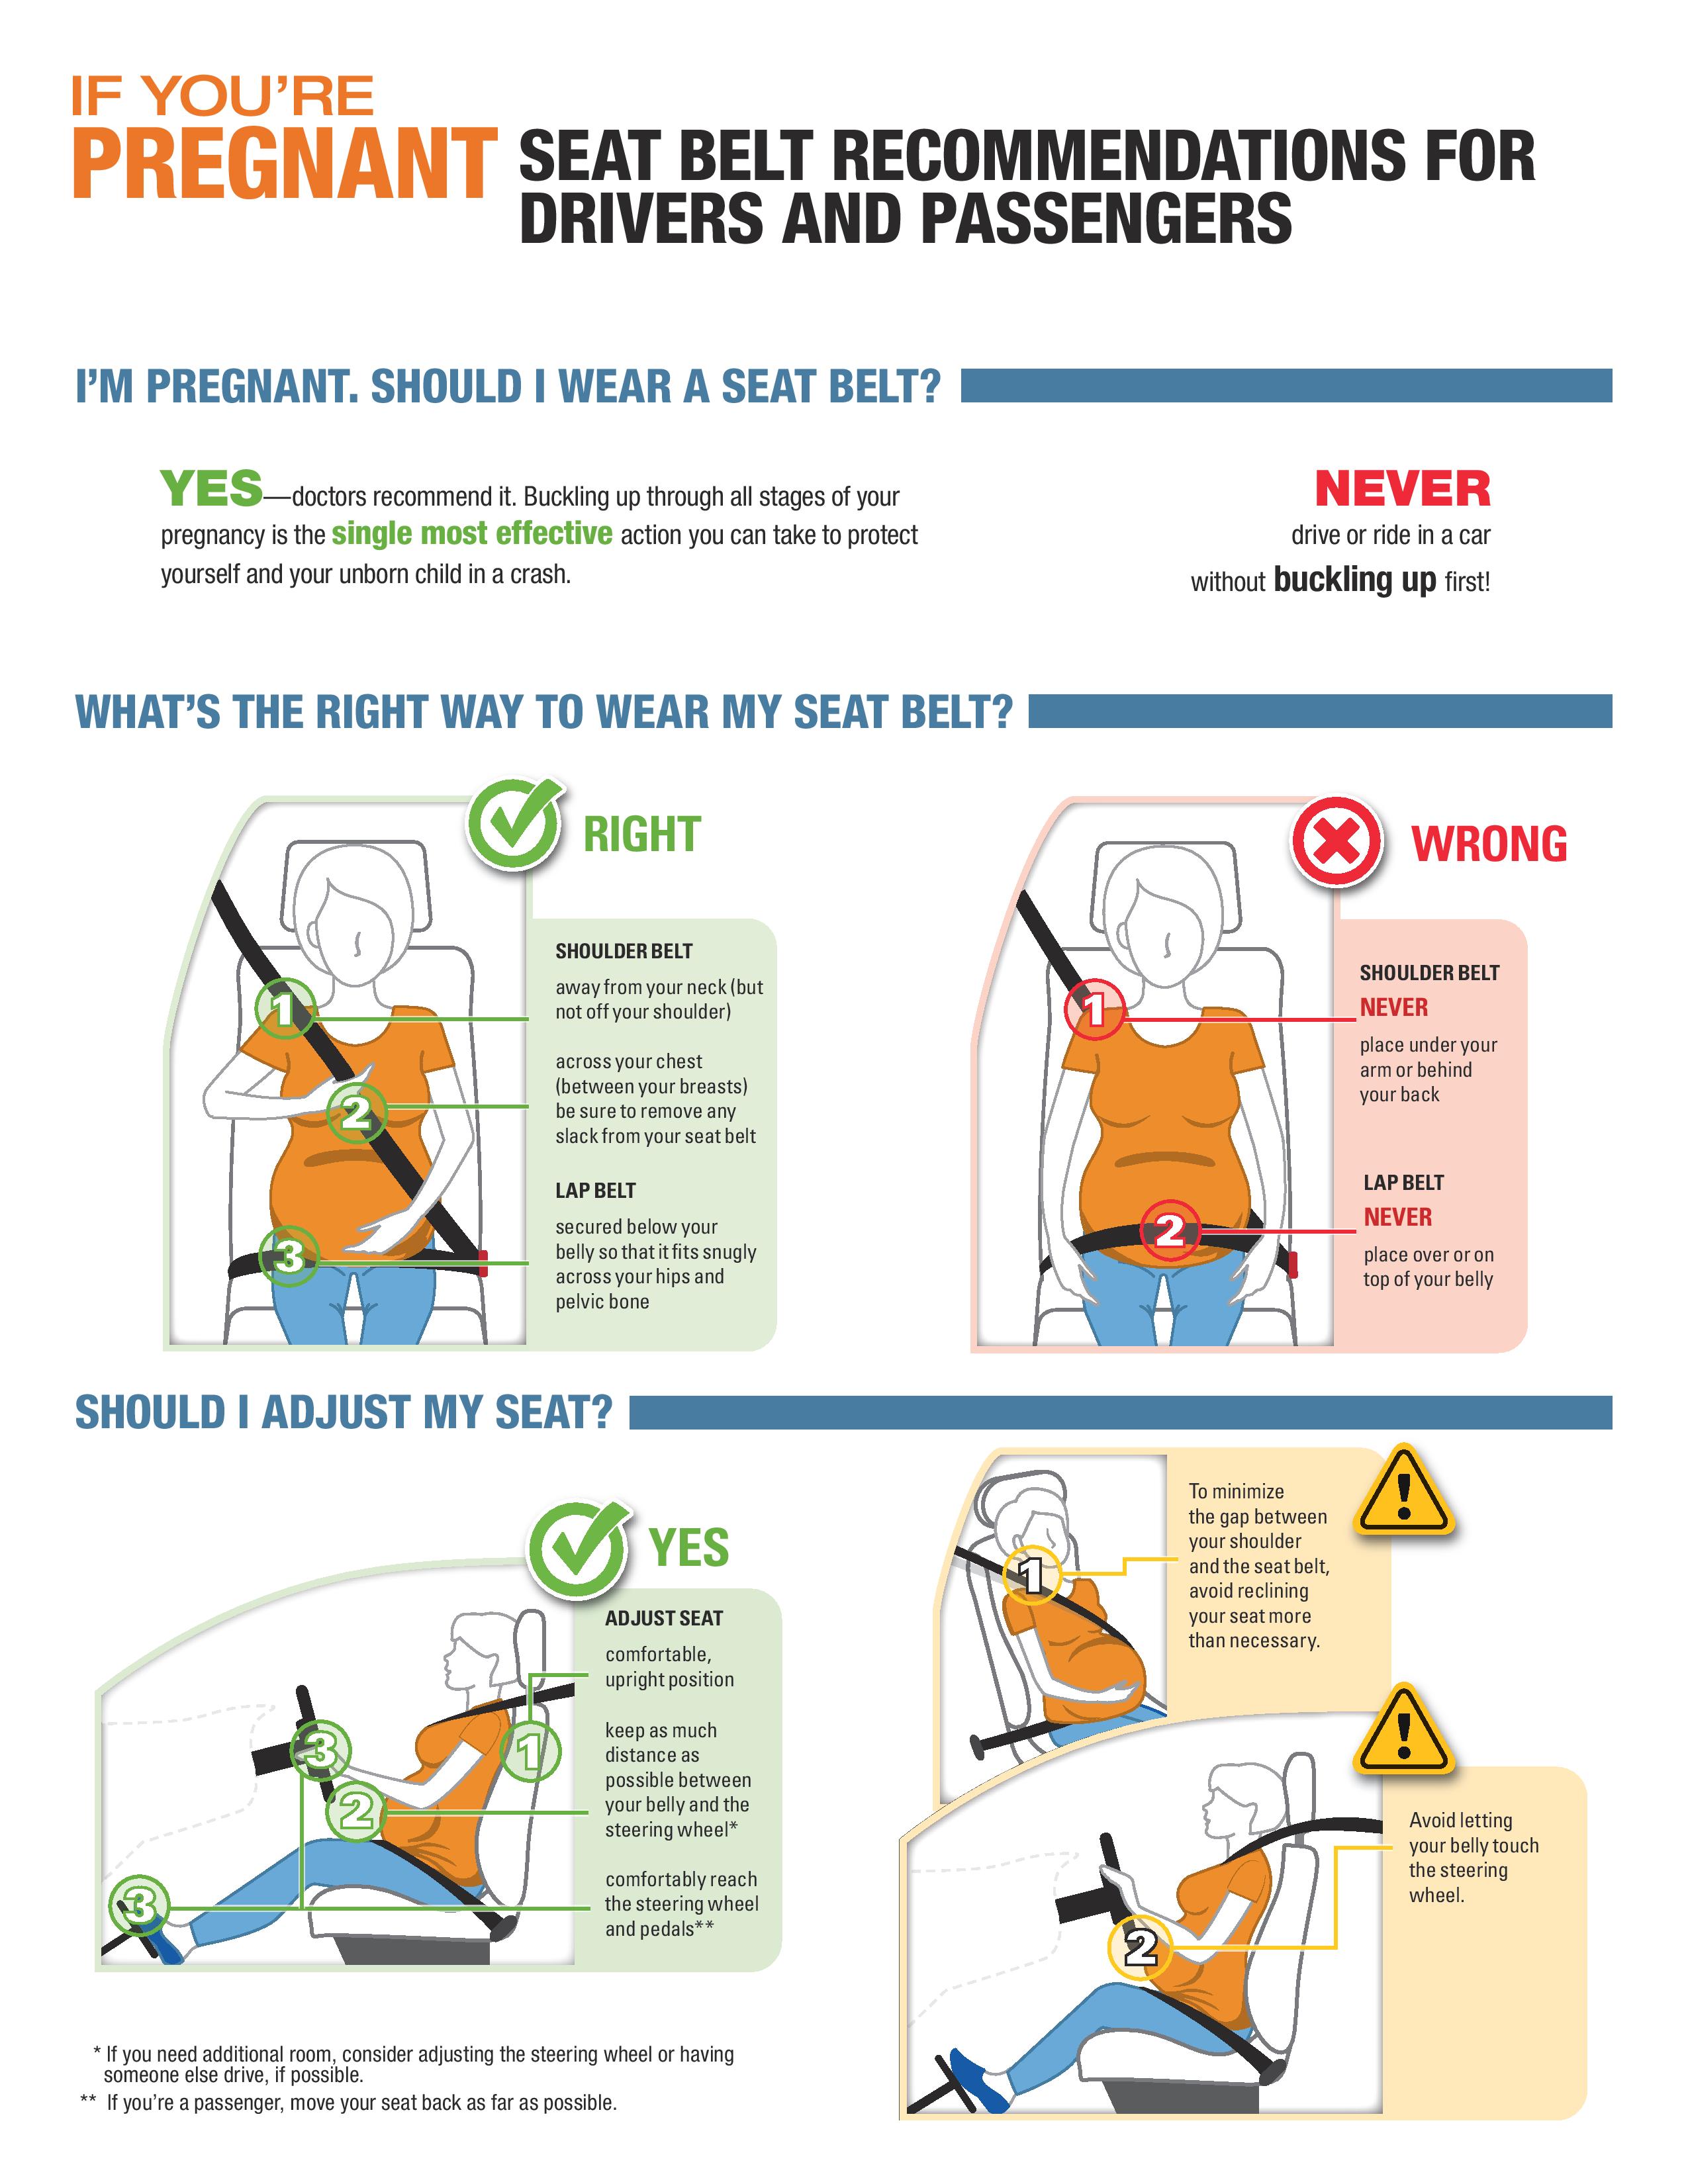 Seatbelt safety during pregnancy flyer